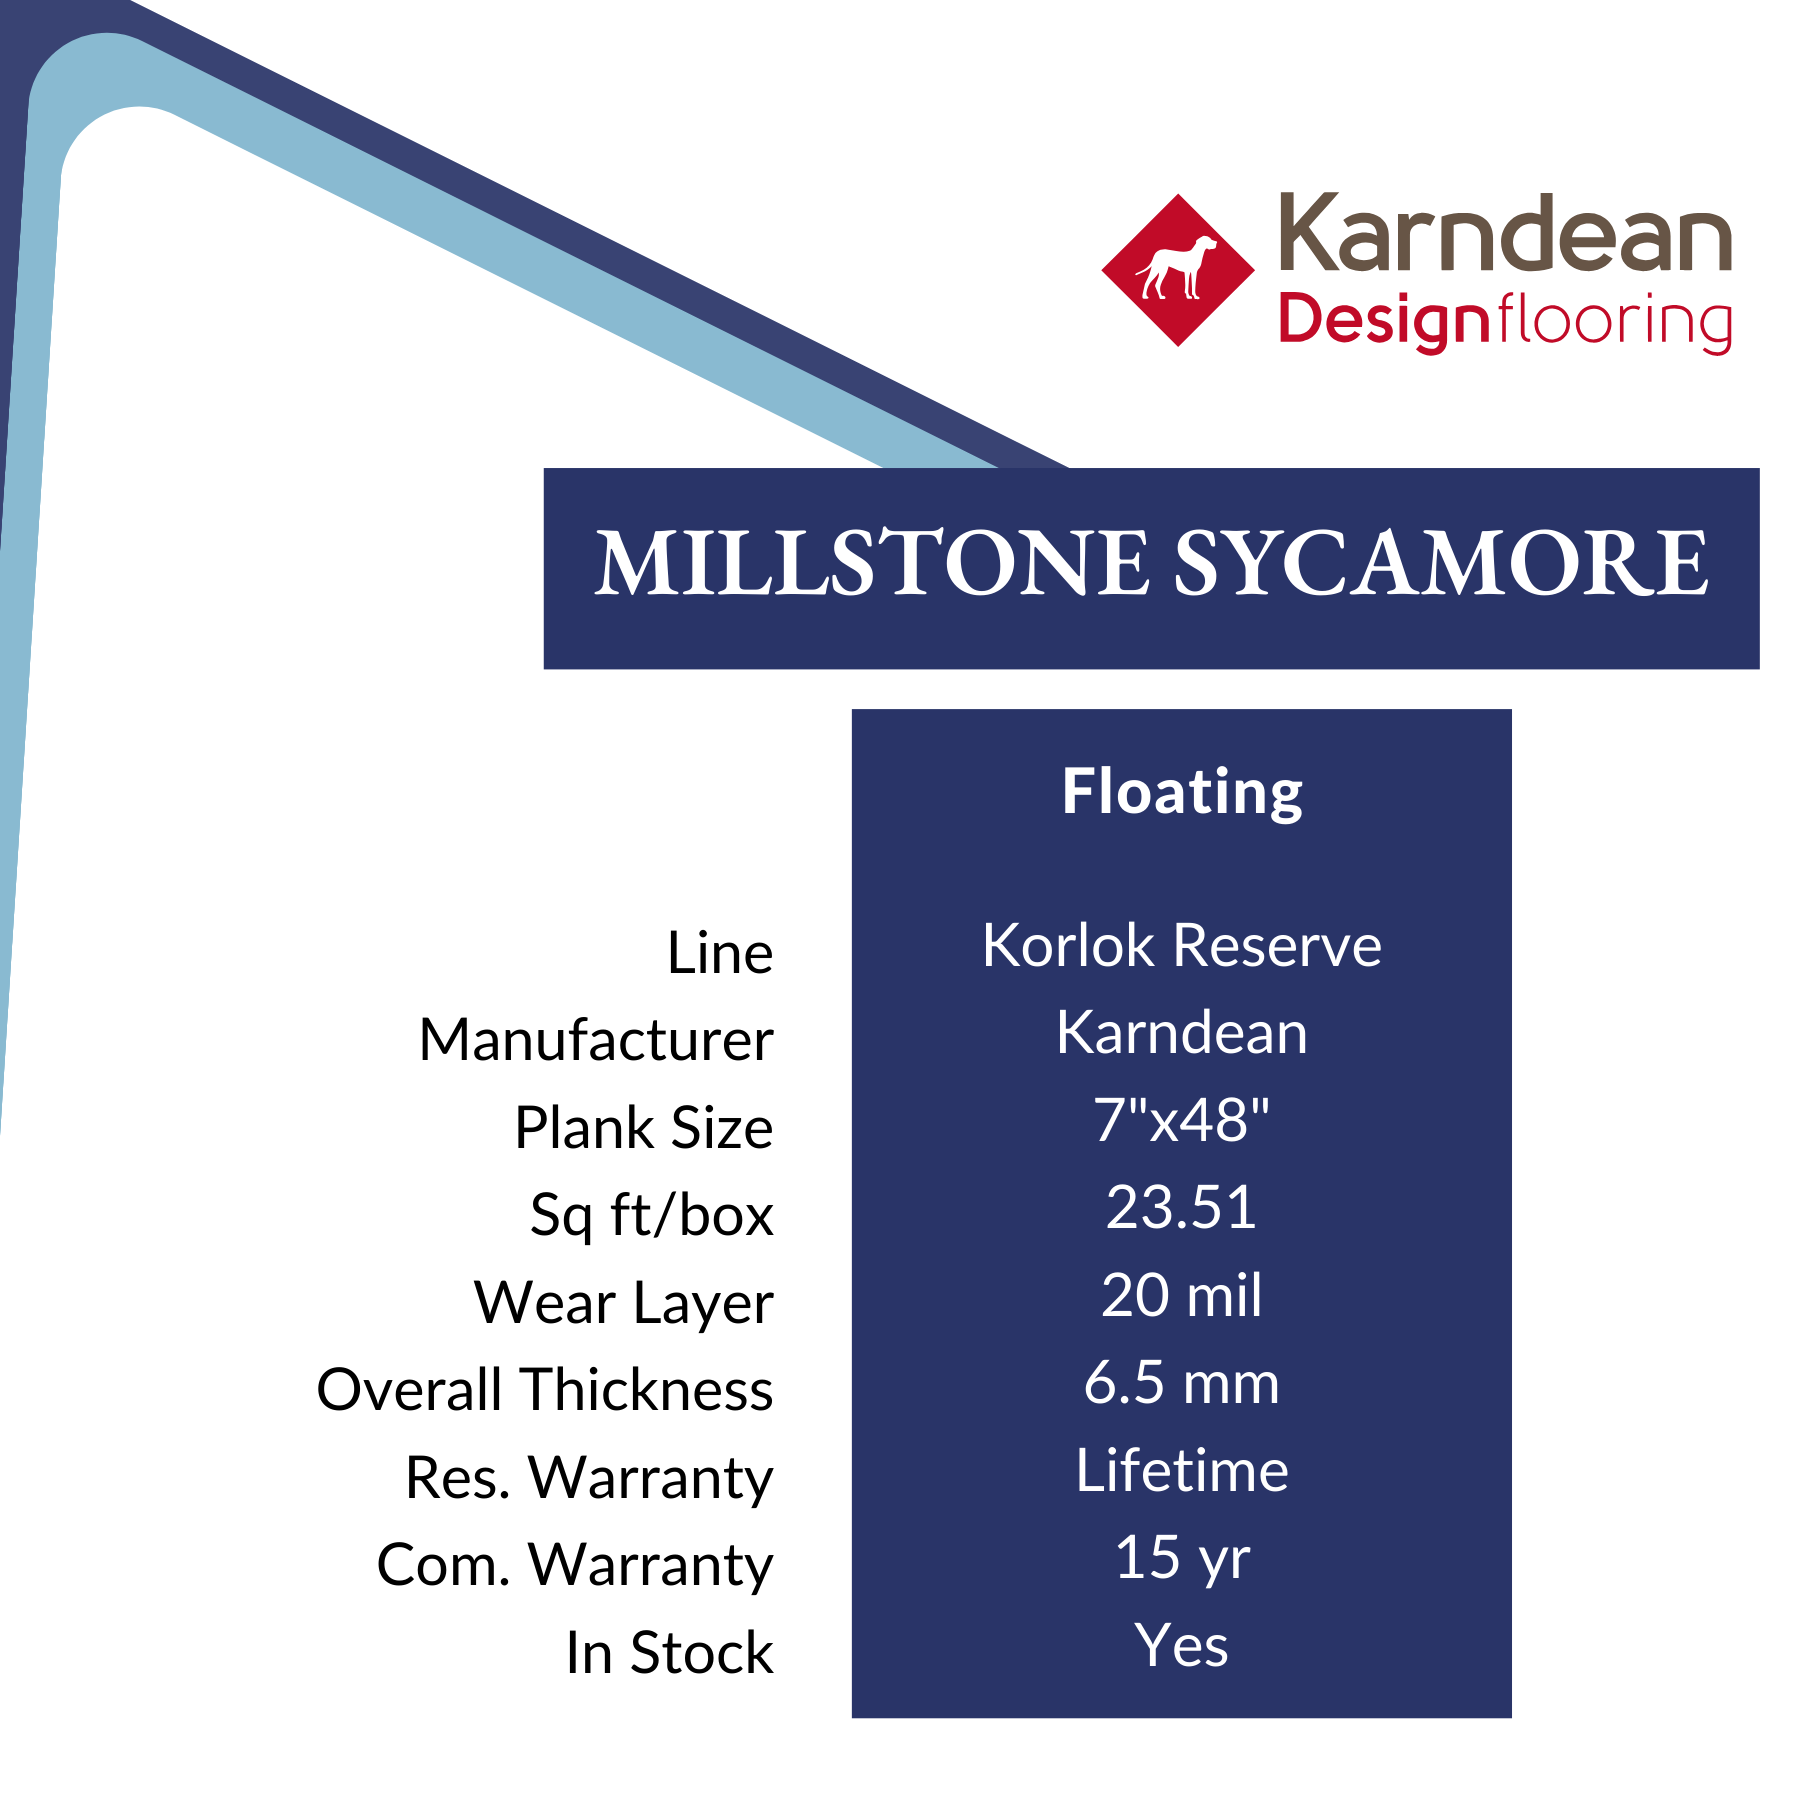 Millstone Sycamore Luxury Vinyl Flooring from Karndean, sold at Calhoun’s, Springfield, IL Specs